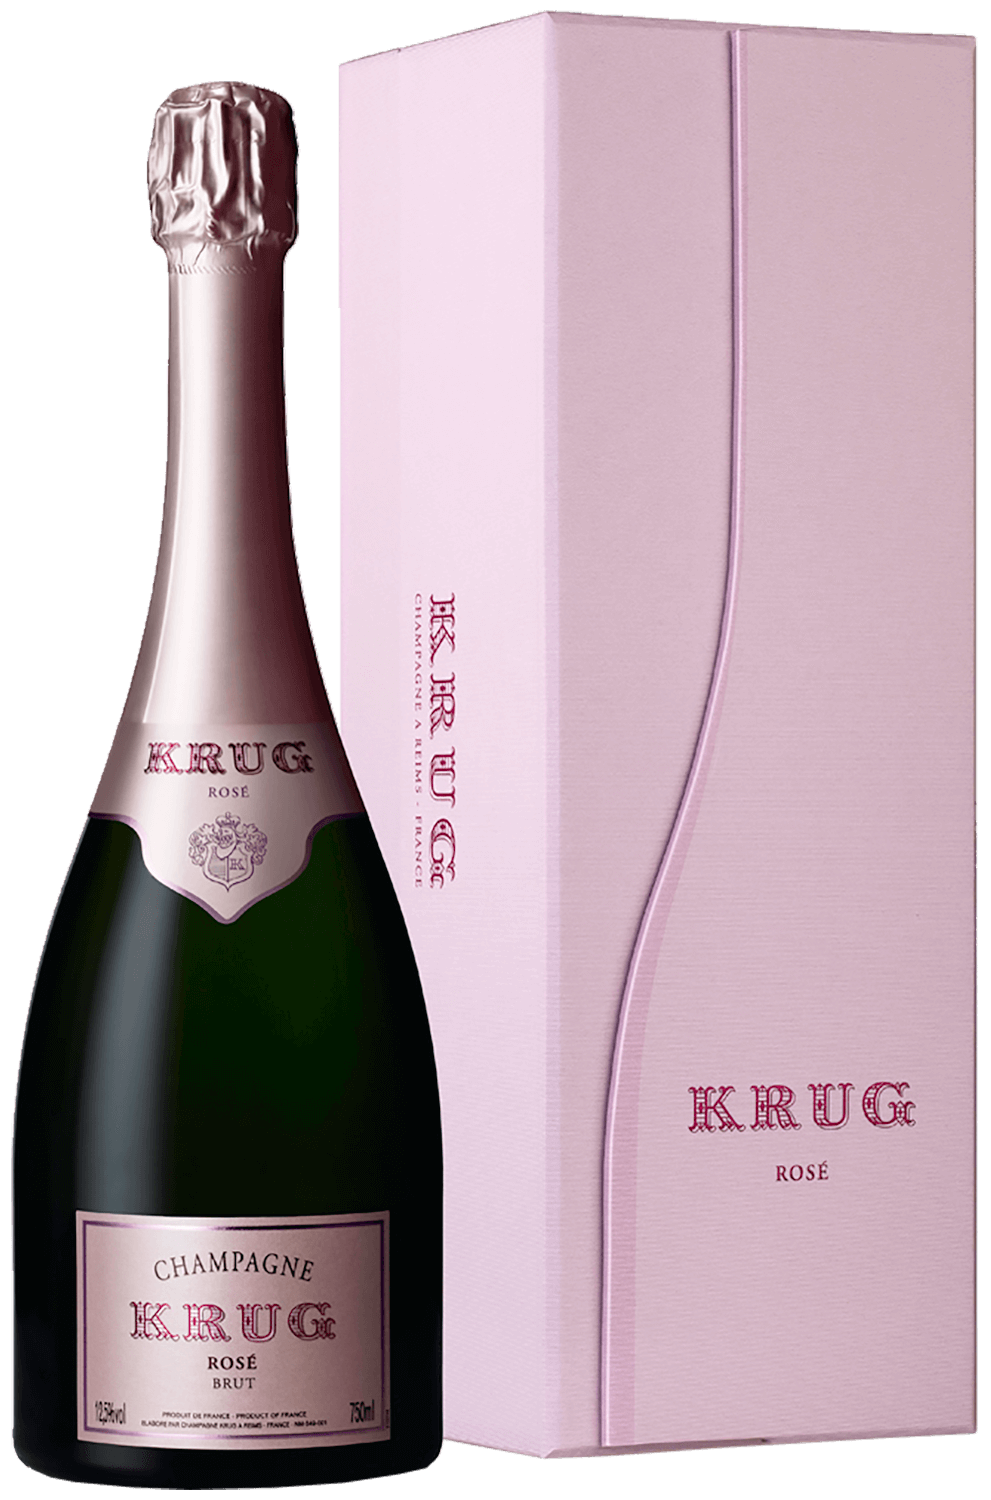 Krug Rose Brut Champagne AOC (in gift box) taittinger comtes de champagne rose champagne aoc gift box